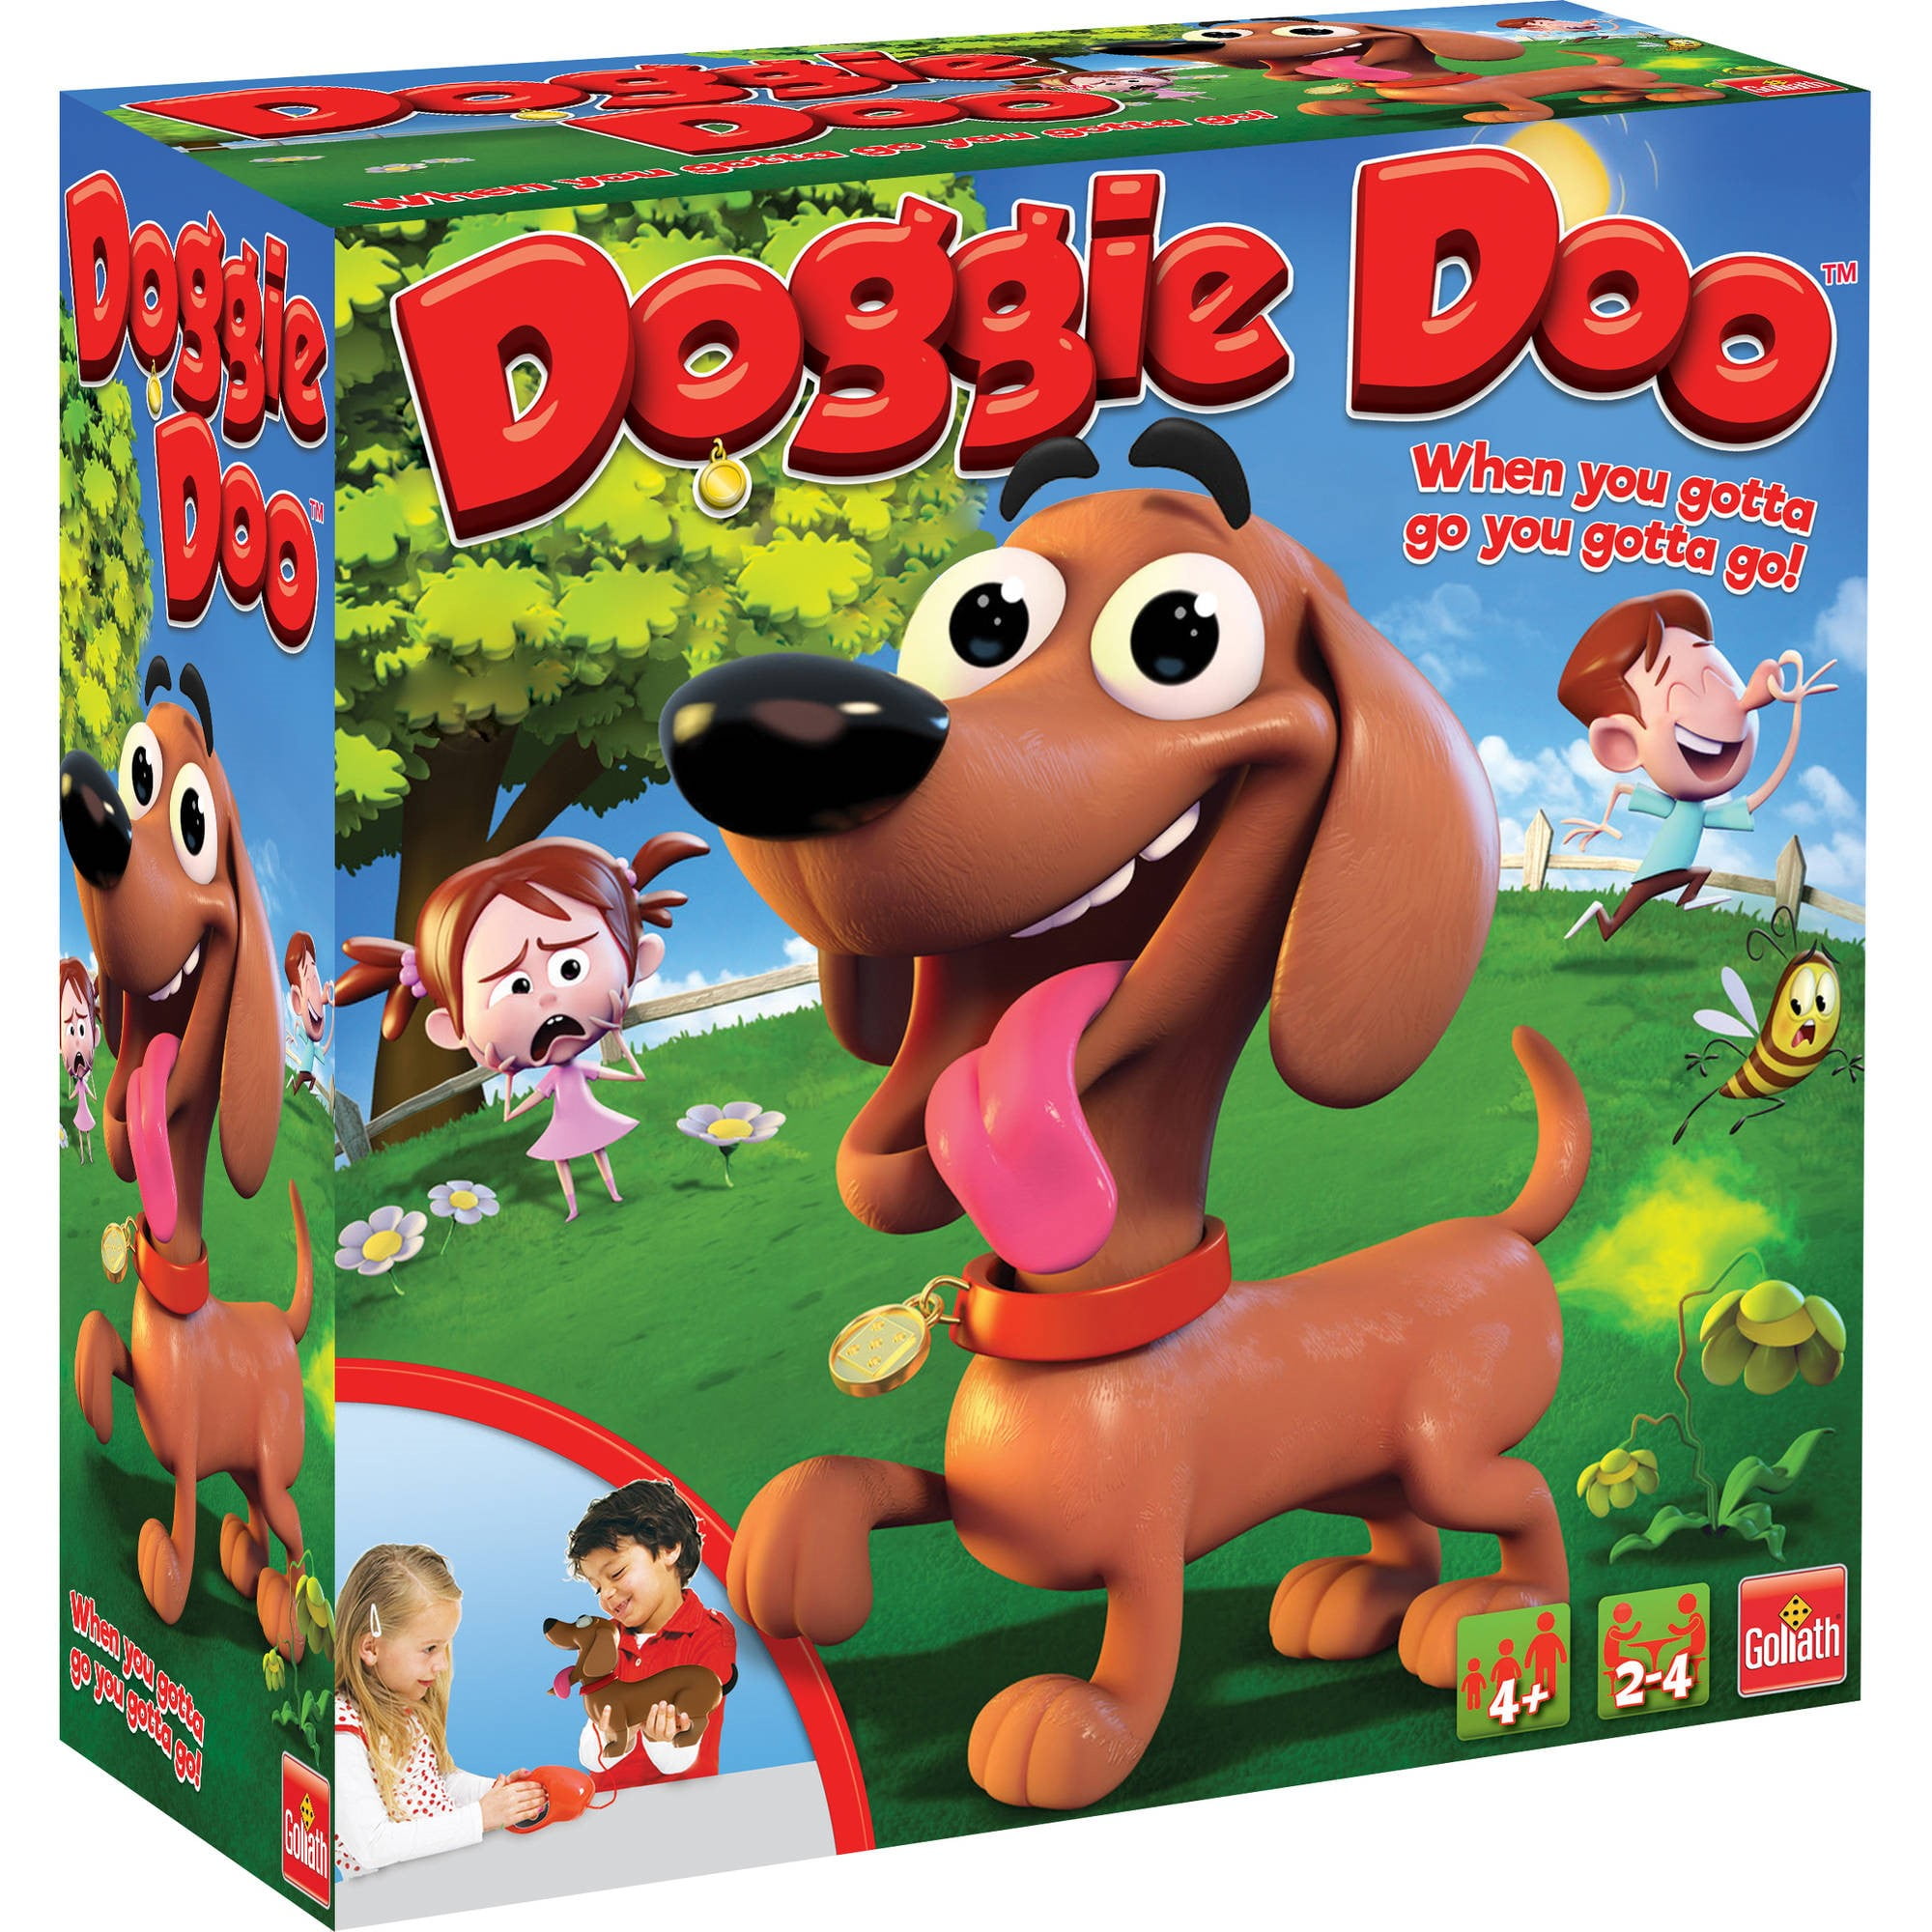 Doggie Doo Game. 